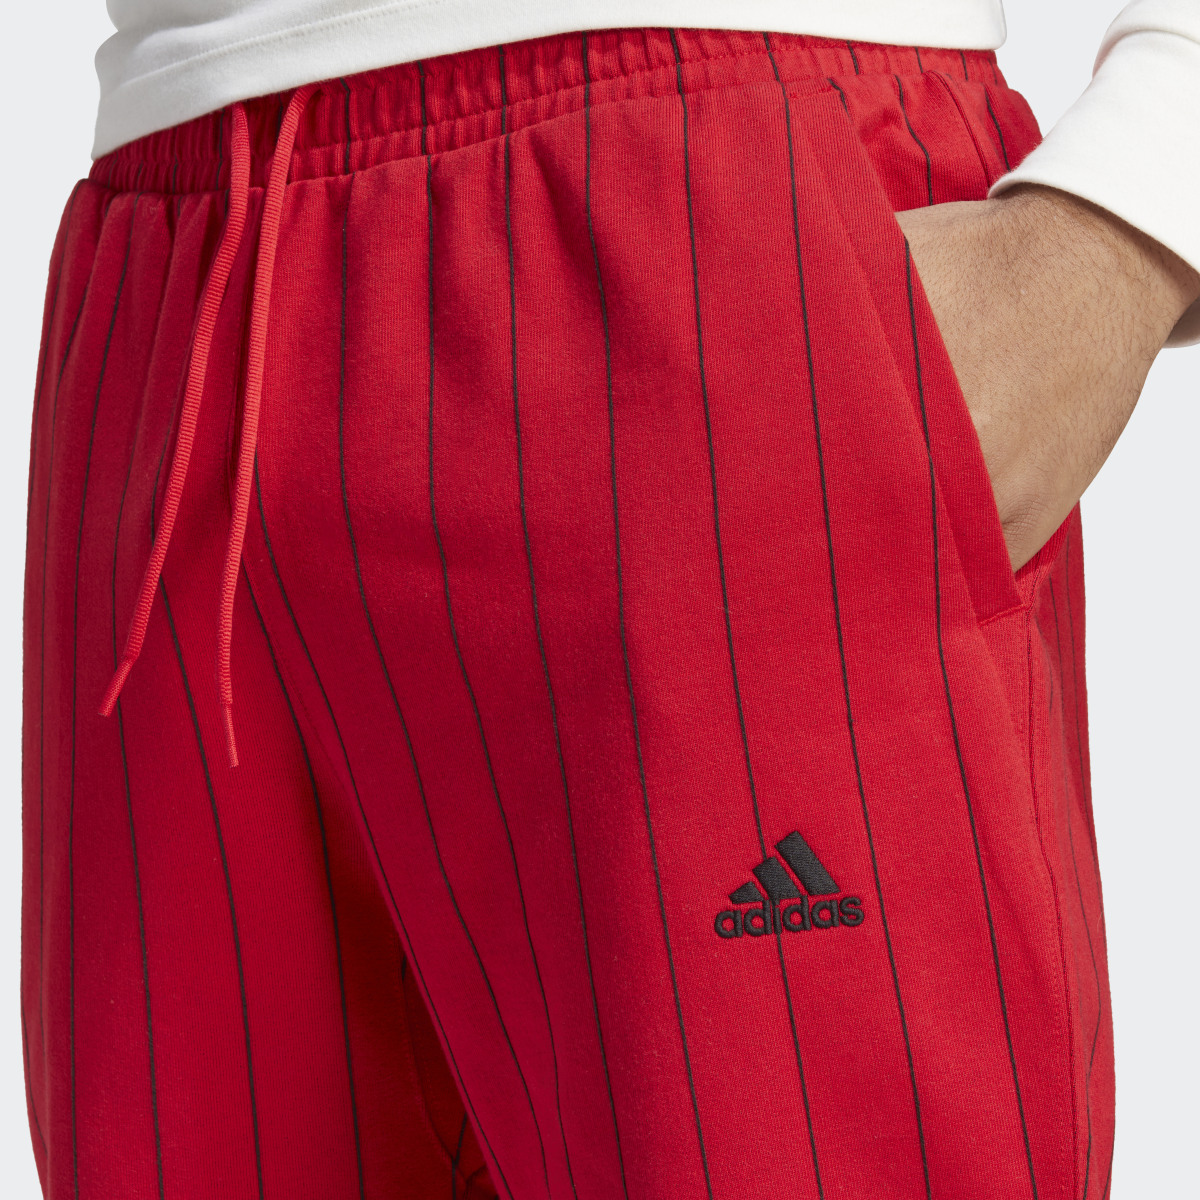 Adidas Pinstripe Fleece Pants. 5